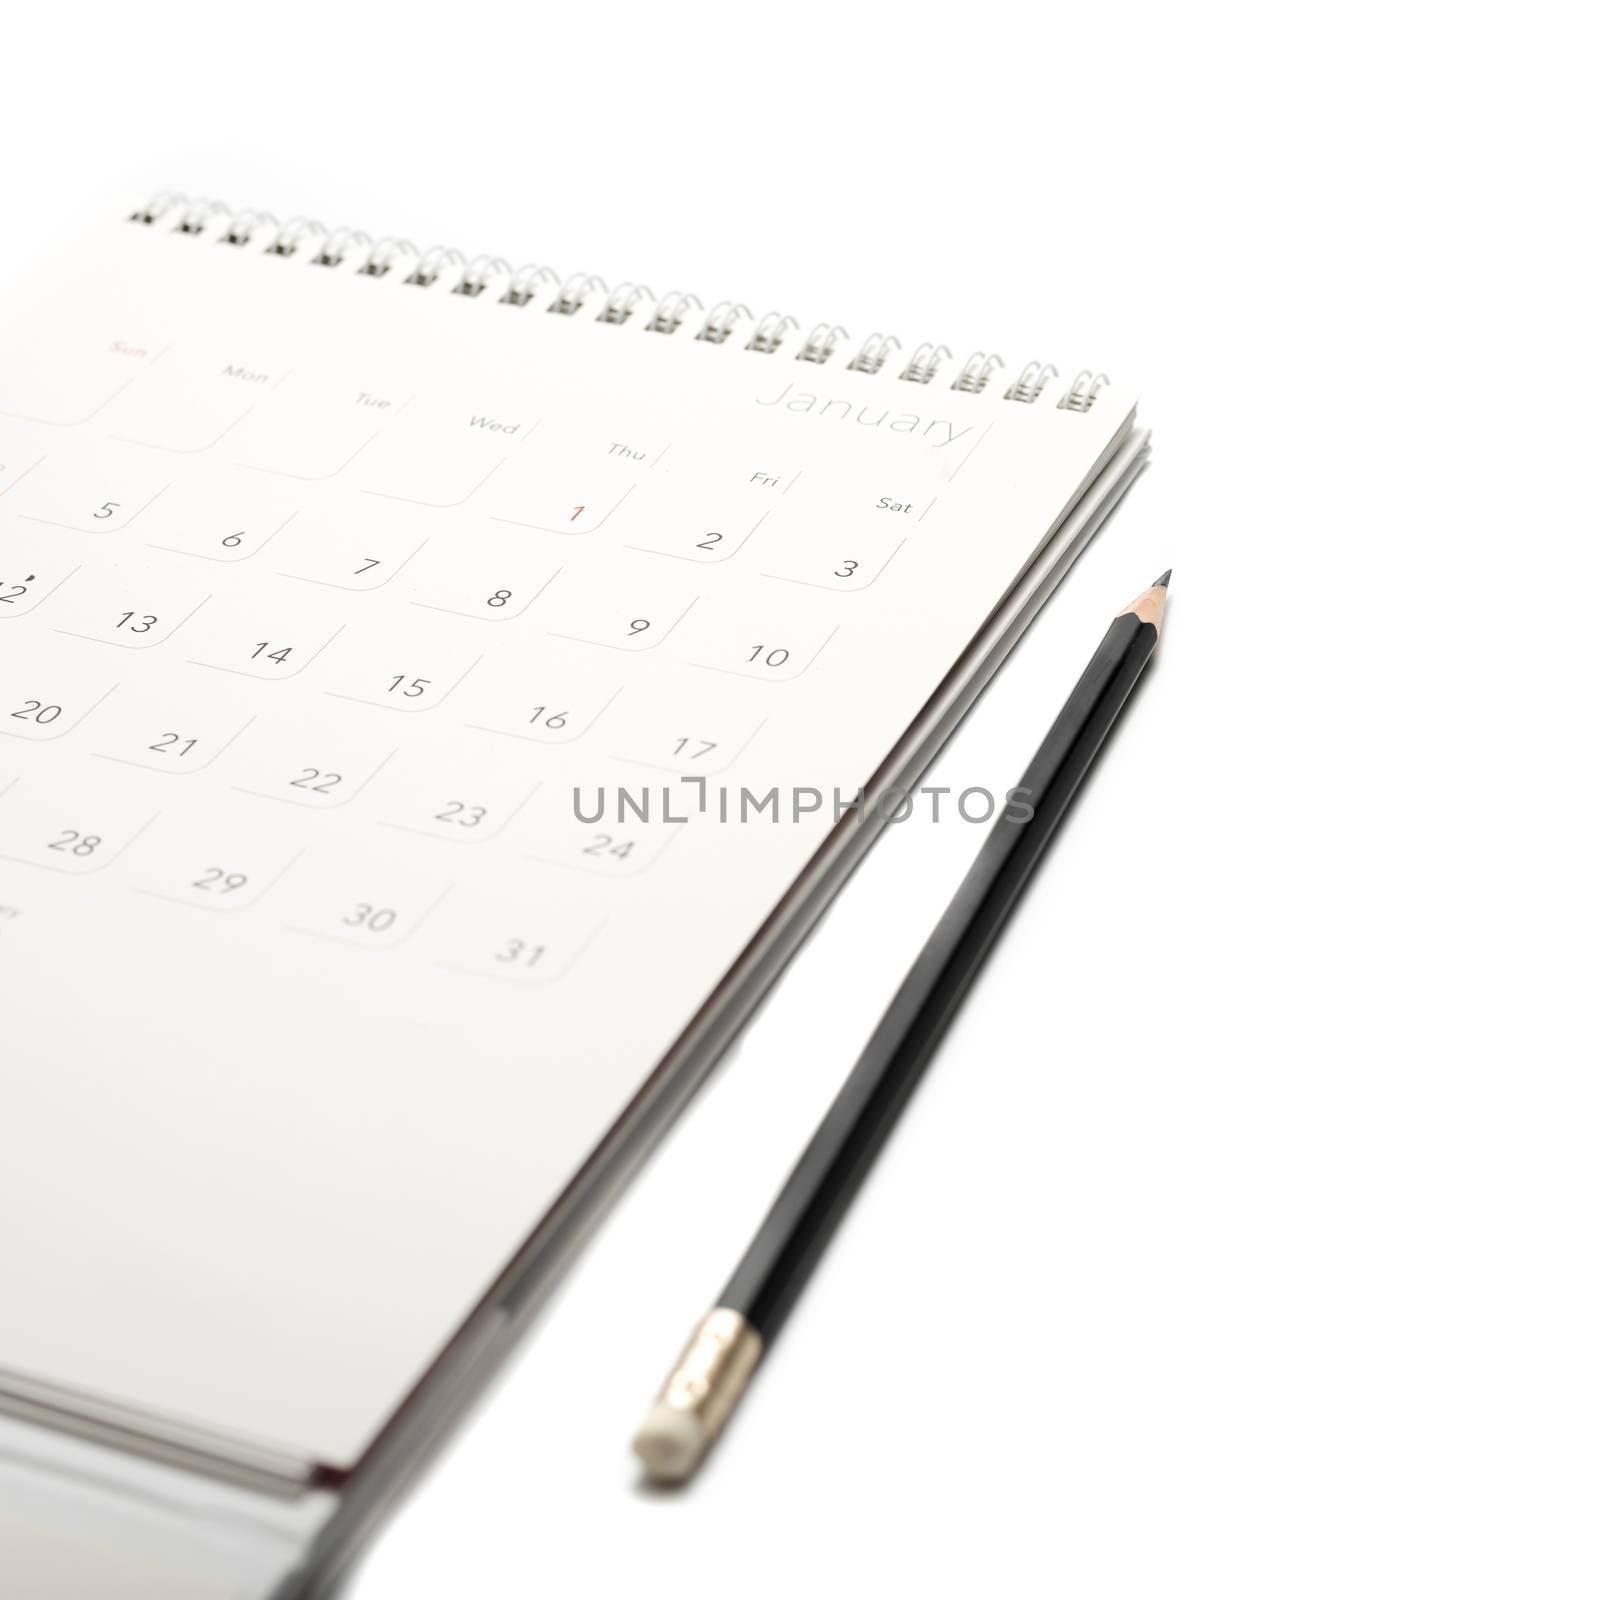 calendar and pencil by ammza12